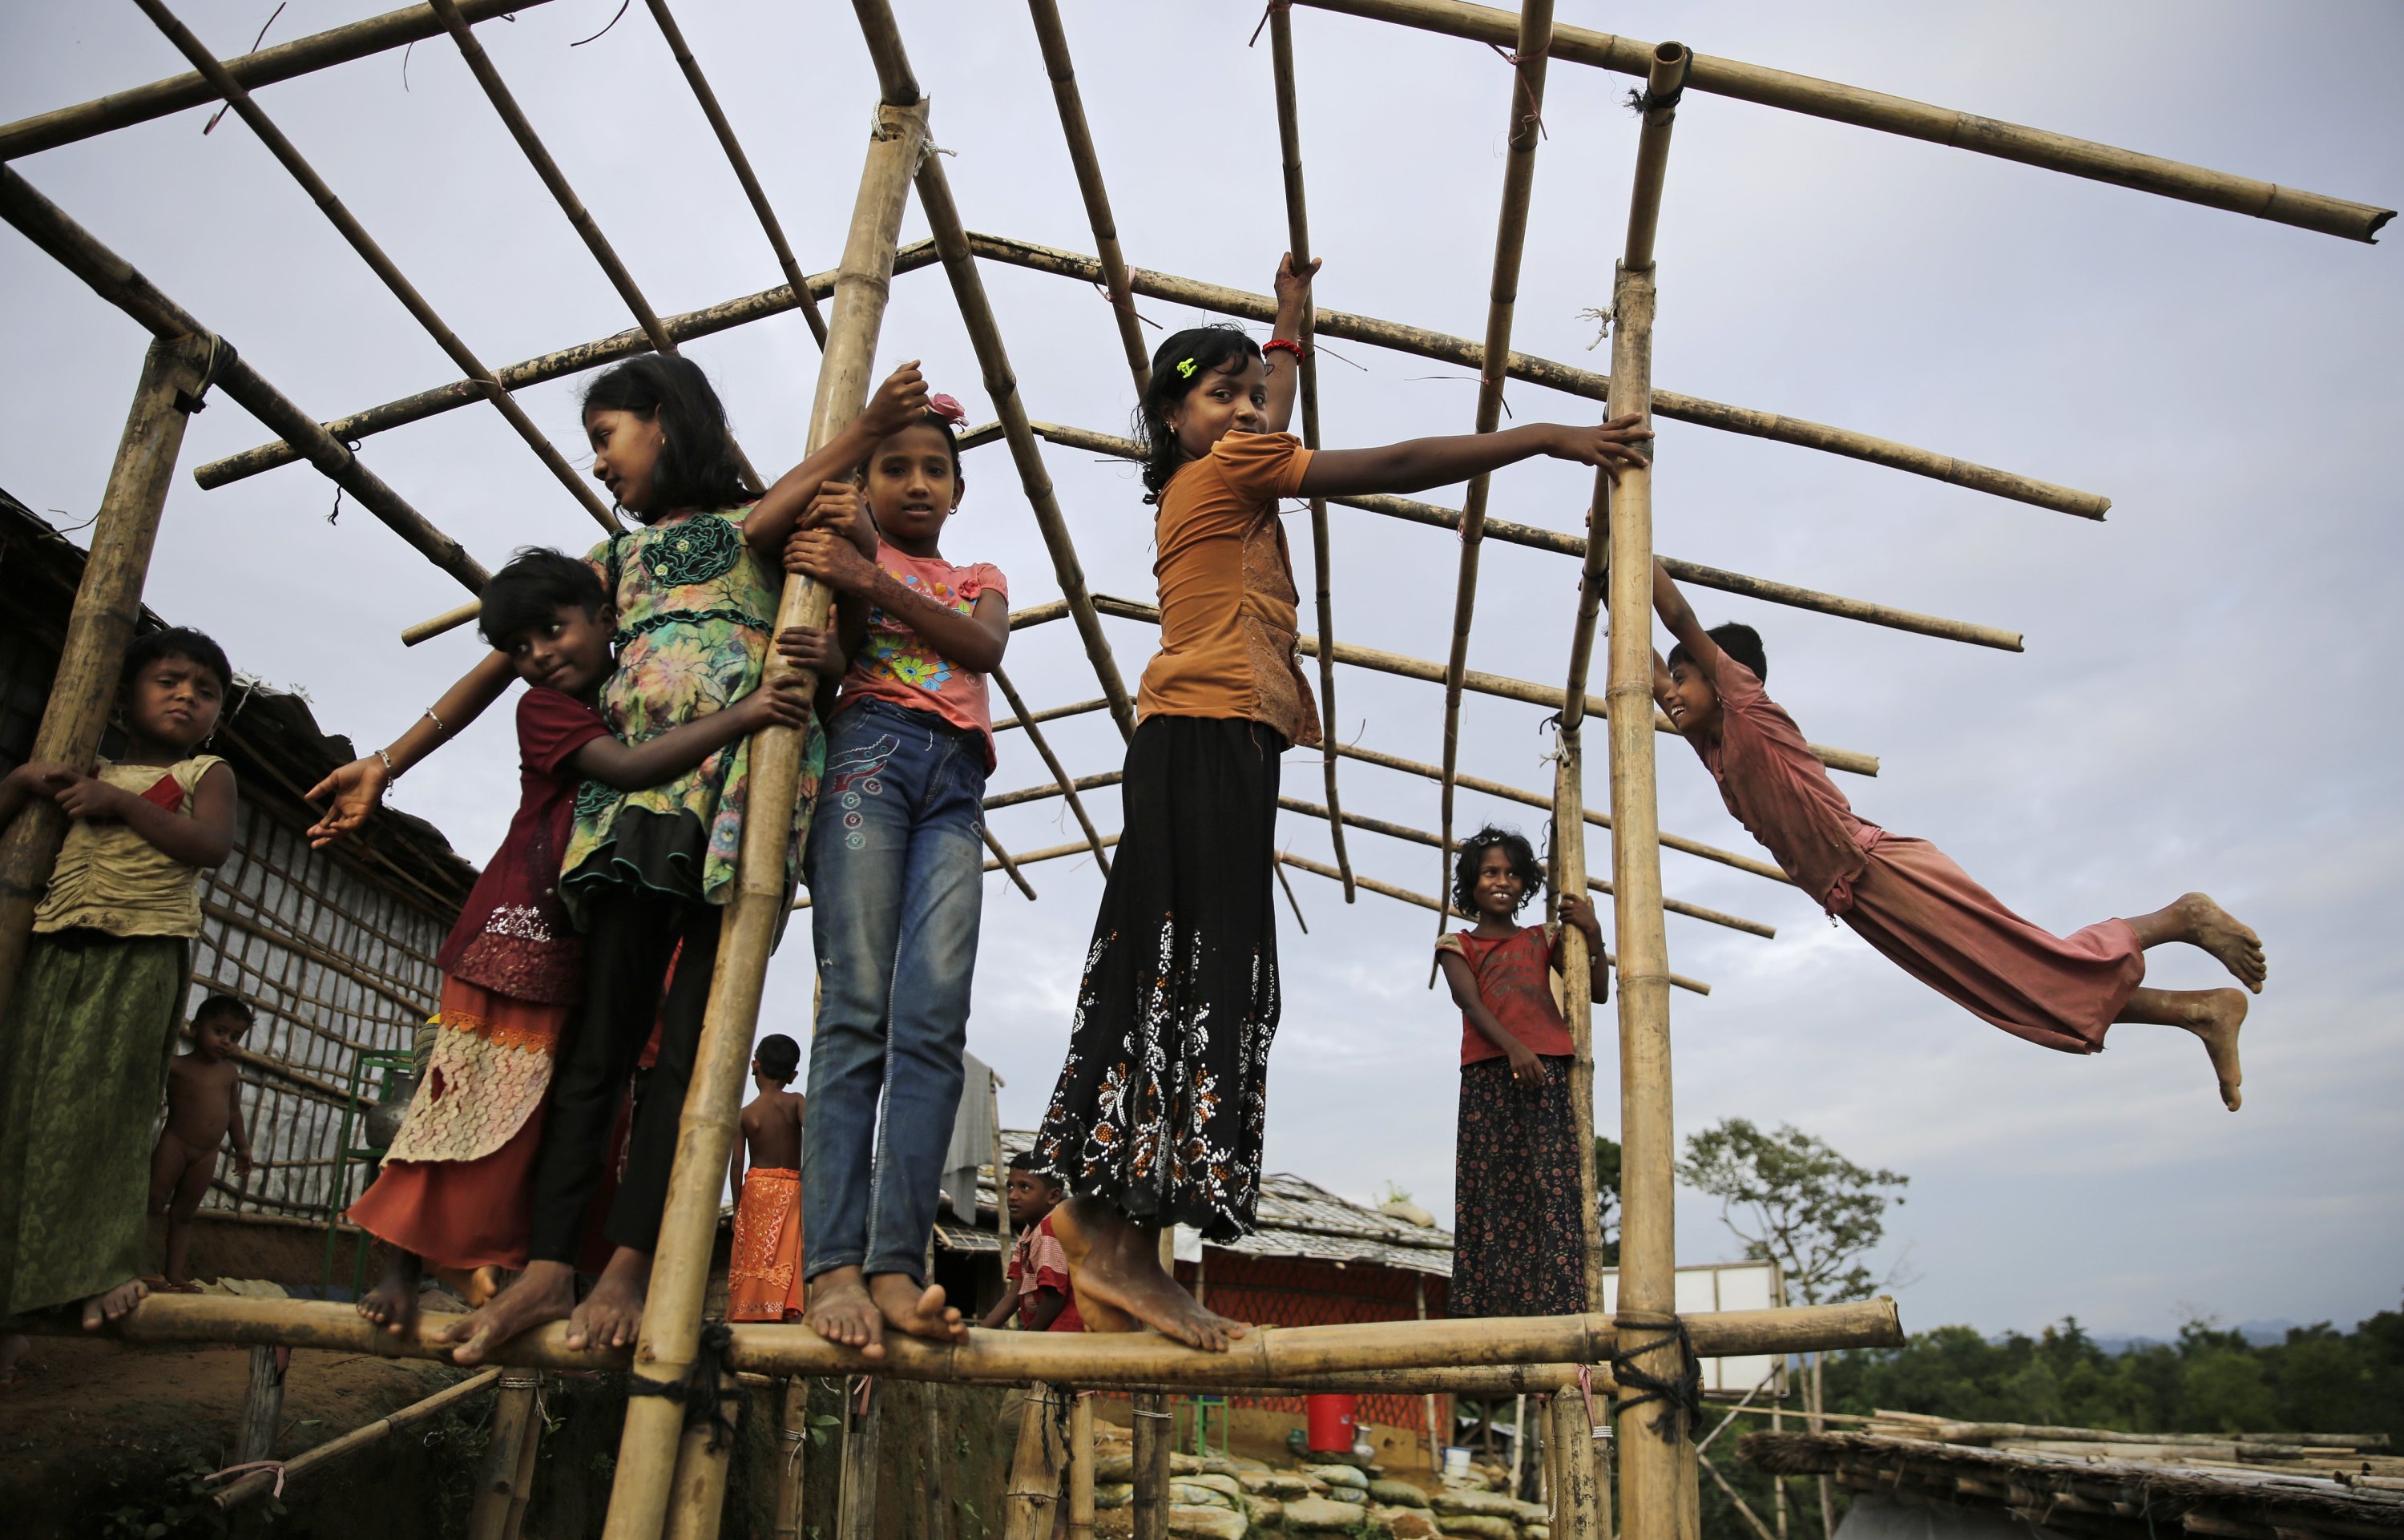 Jumlah orang yang terpaksa melarikan diri dari konflik, kekerasan, pelanggaran hak asasi manusia dan penganiayaan telah melampaui angka 100 juta untuk pertama kalinya dalam catatan, didorong oleh perang di Ukraina dan konflik mematikan lainnya, Badan pengungsi PBB mengatakan Senin, 23 Mei , 2022. Anak-anak pengungsi Rohingya bermain di pompa air tangan di Kamp Pengungsi Balukhali di Bangladesh, 27 Agustus 2018. (AP Photo)